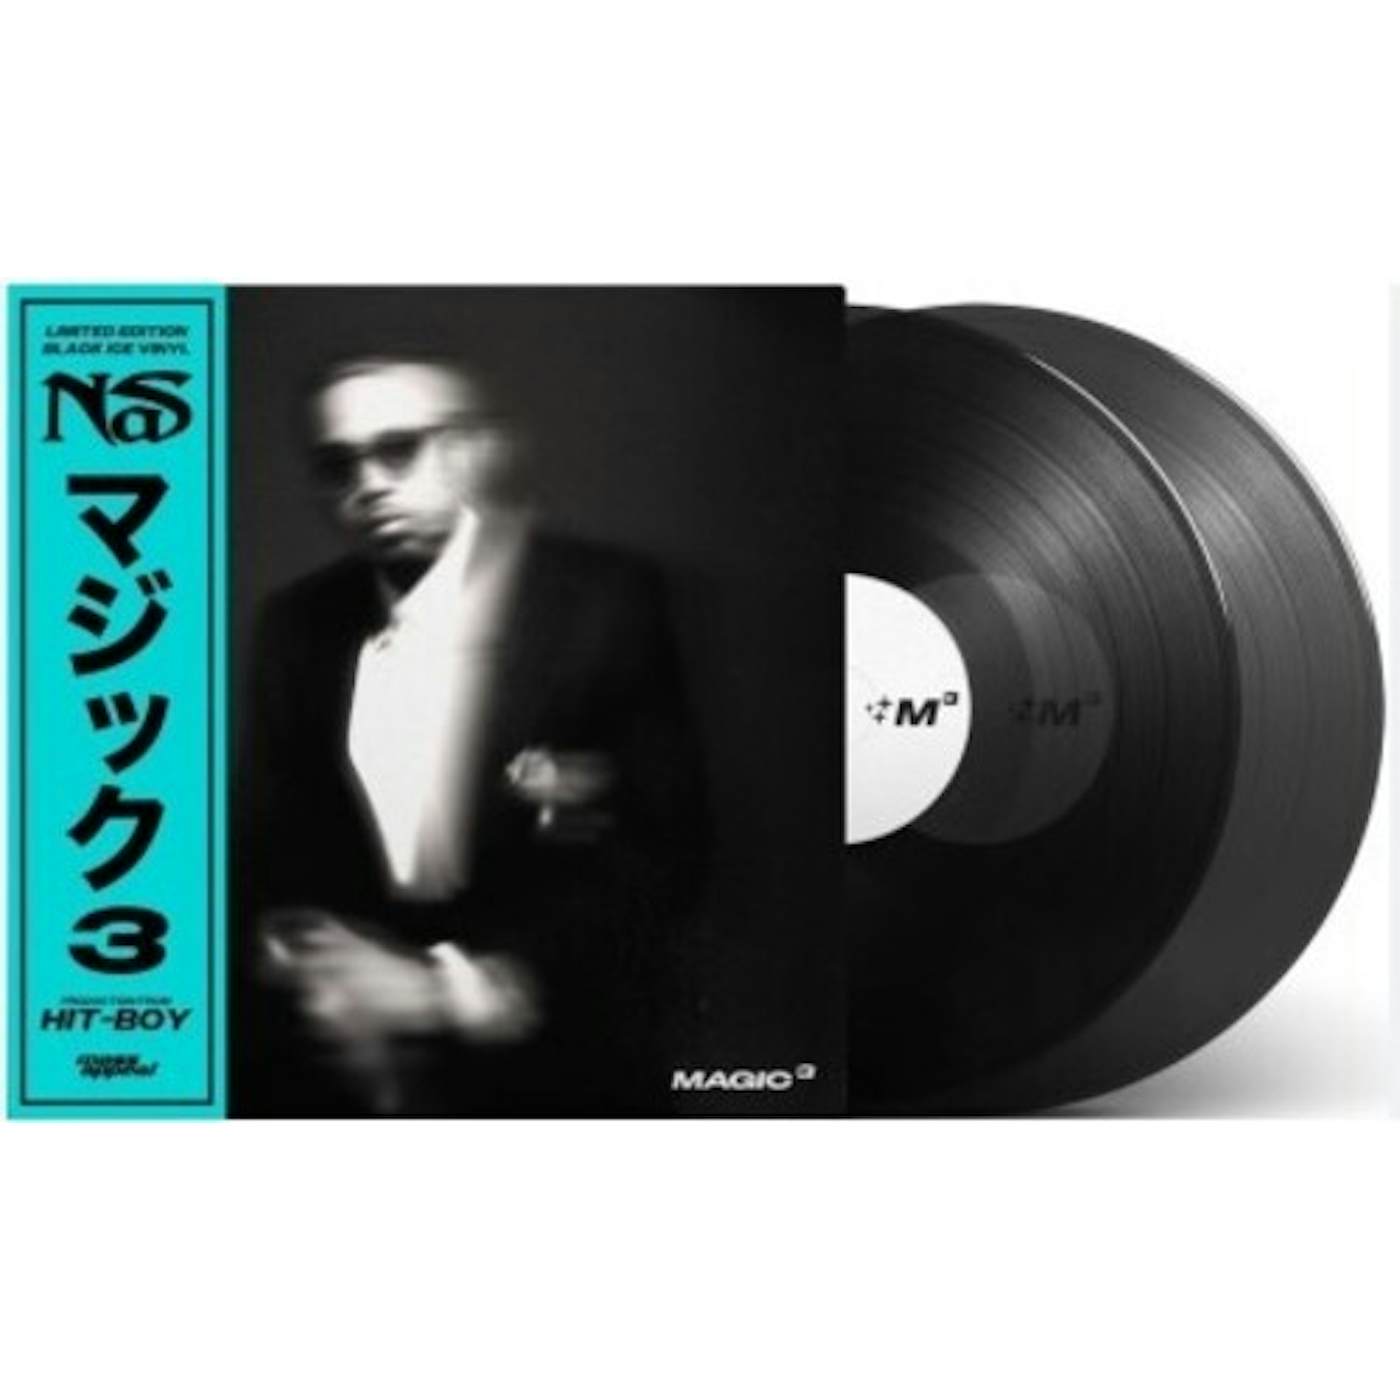 Nas Magic 3 (2LP) Vinyl Record